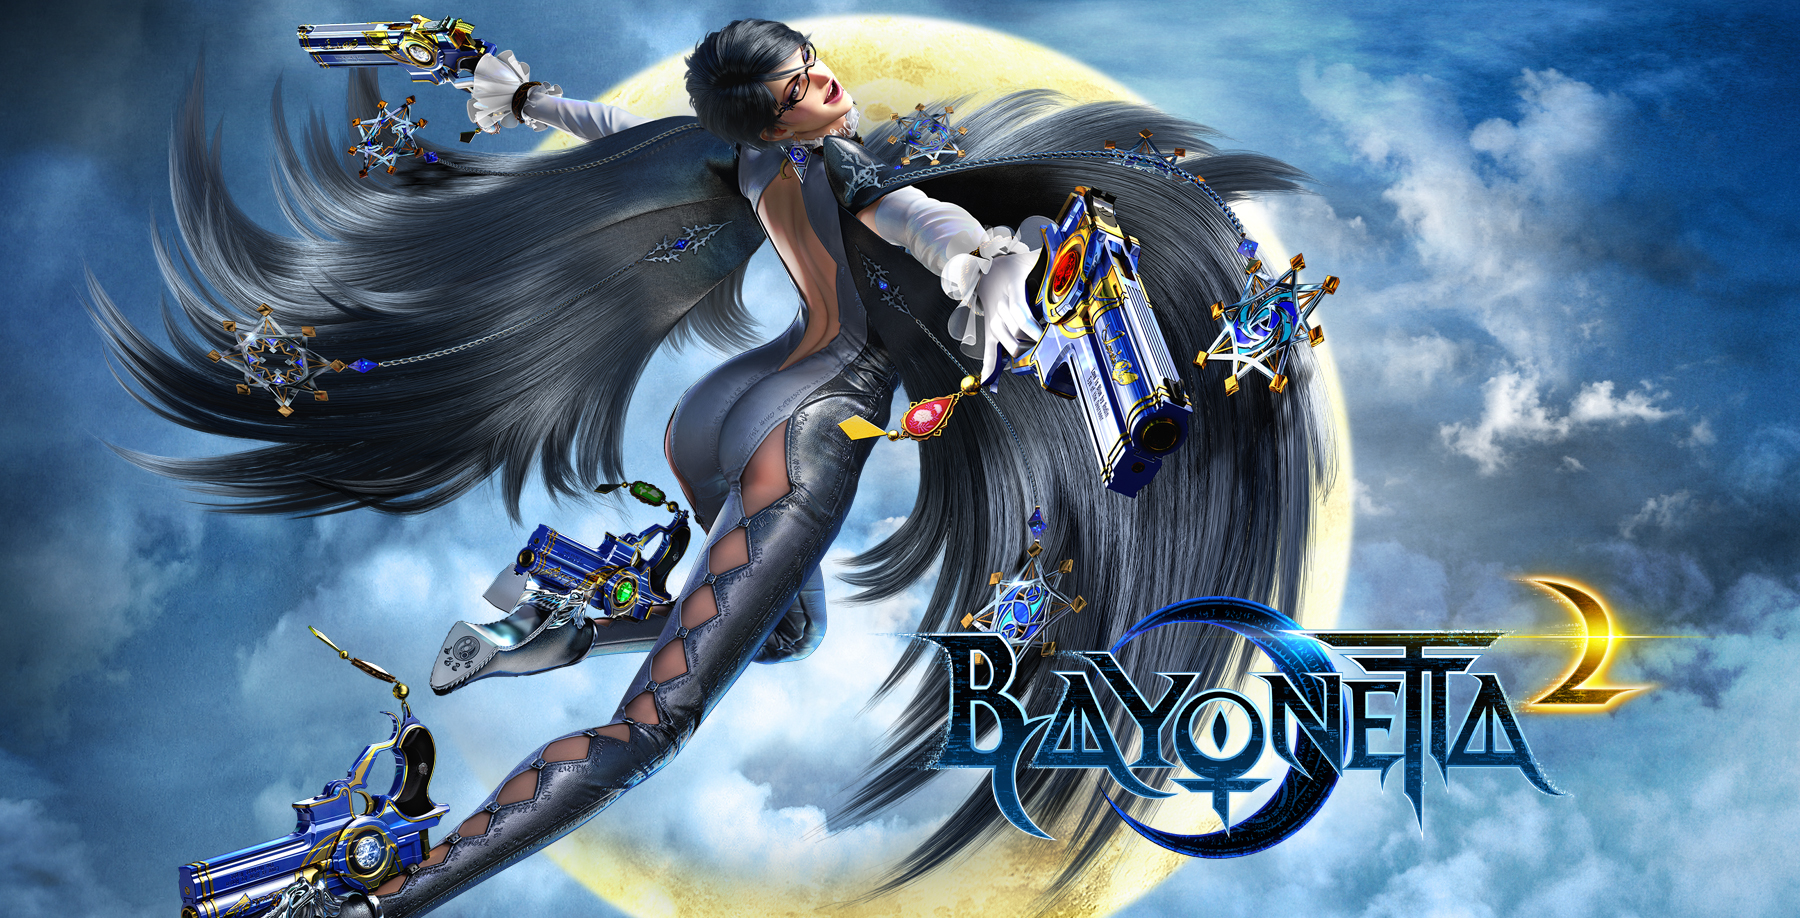 Bayonetta 2 PC Game Latest Version Free Download